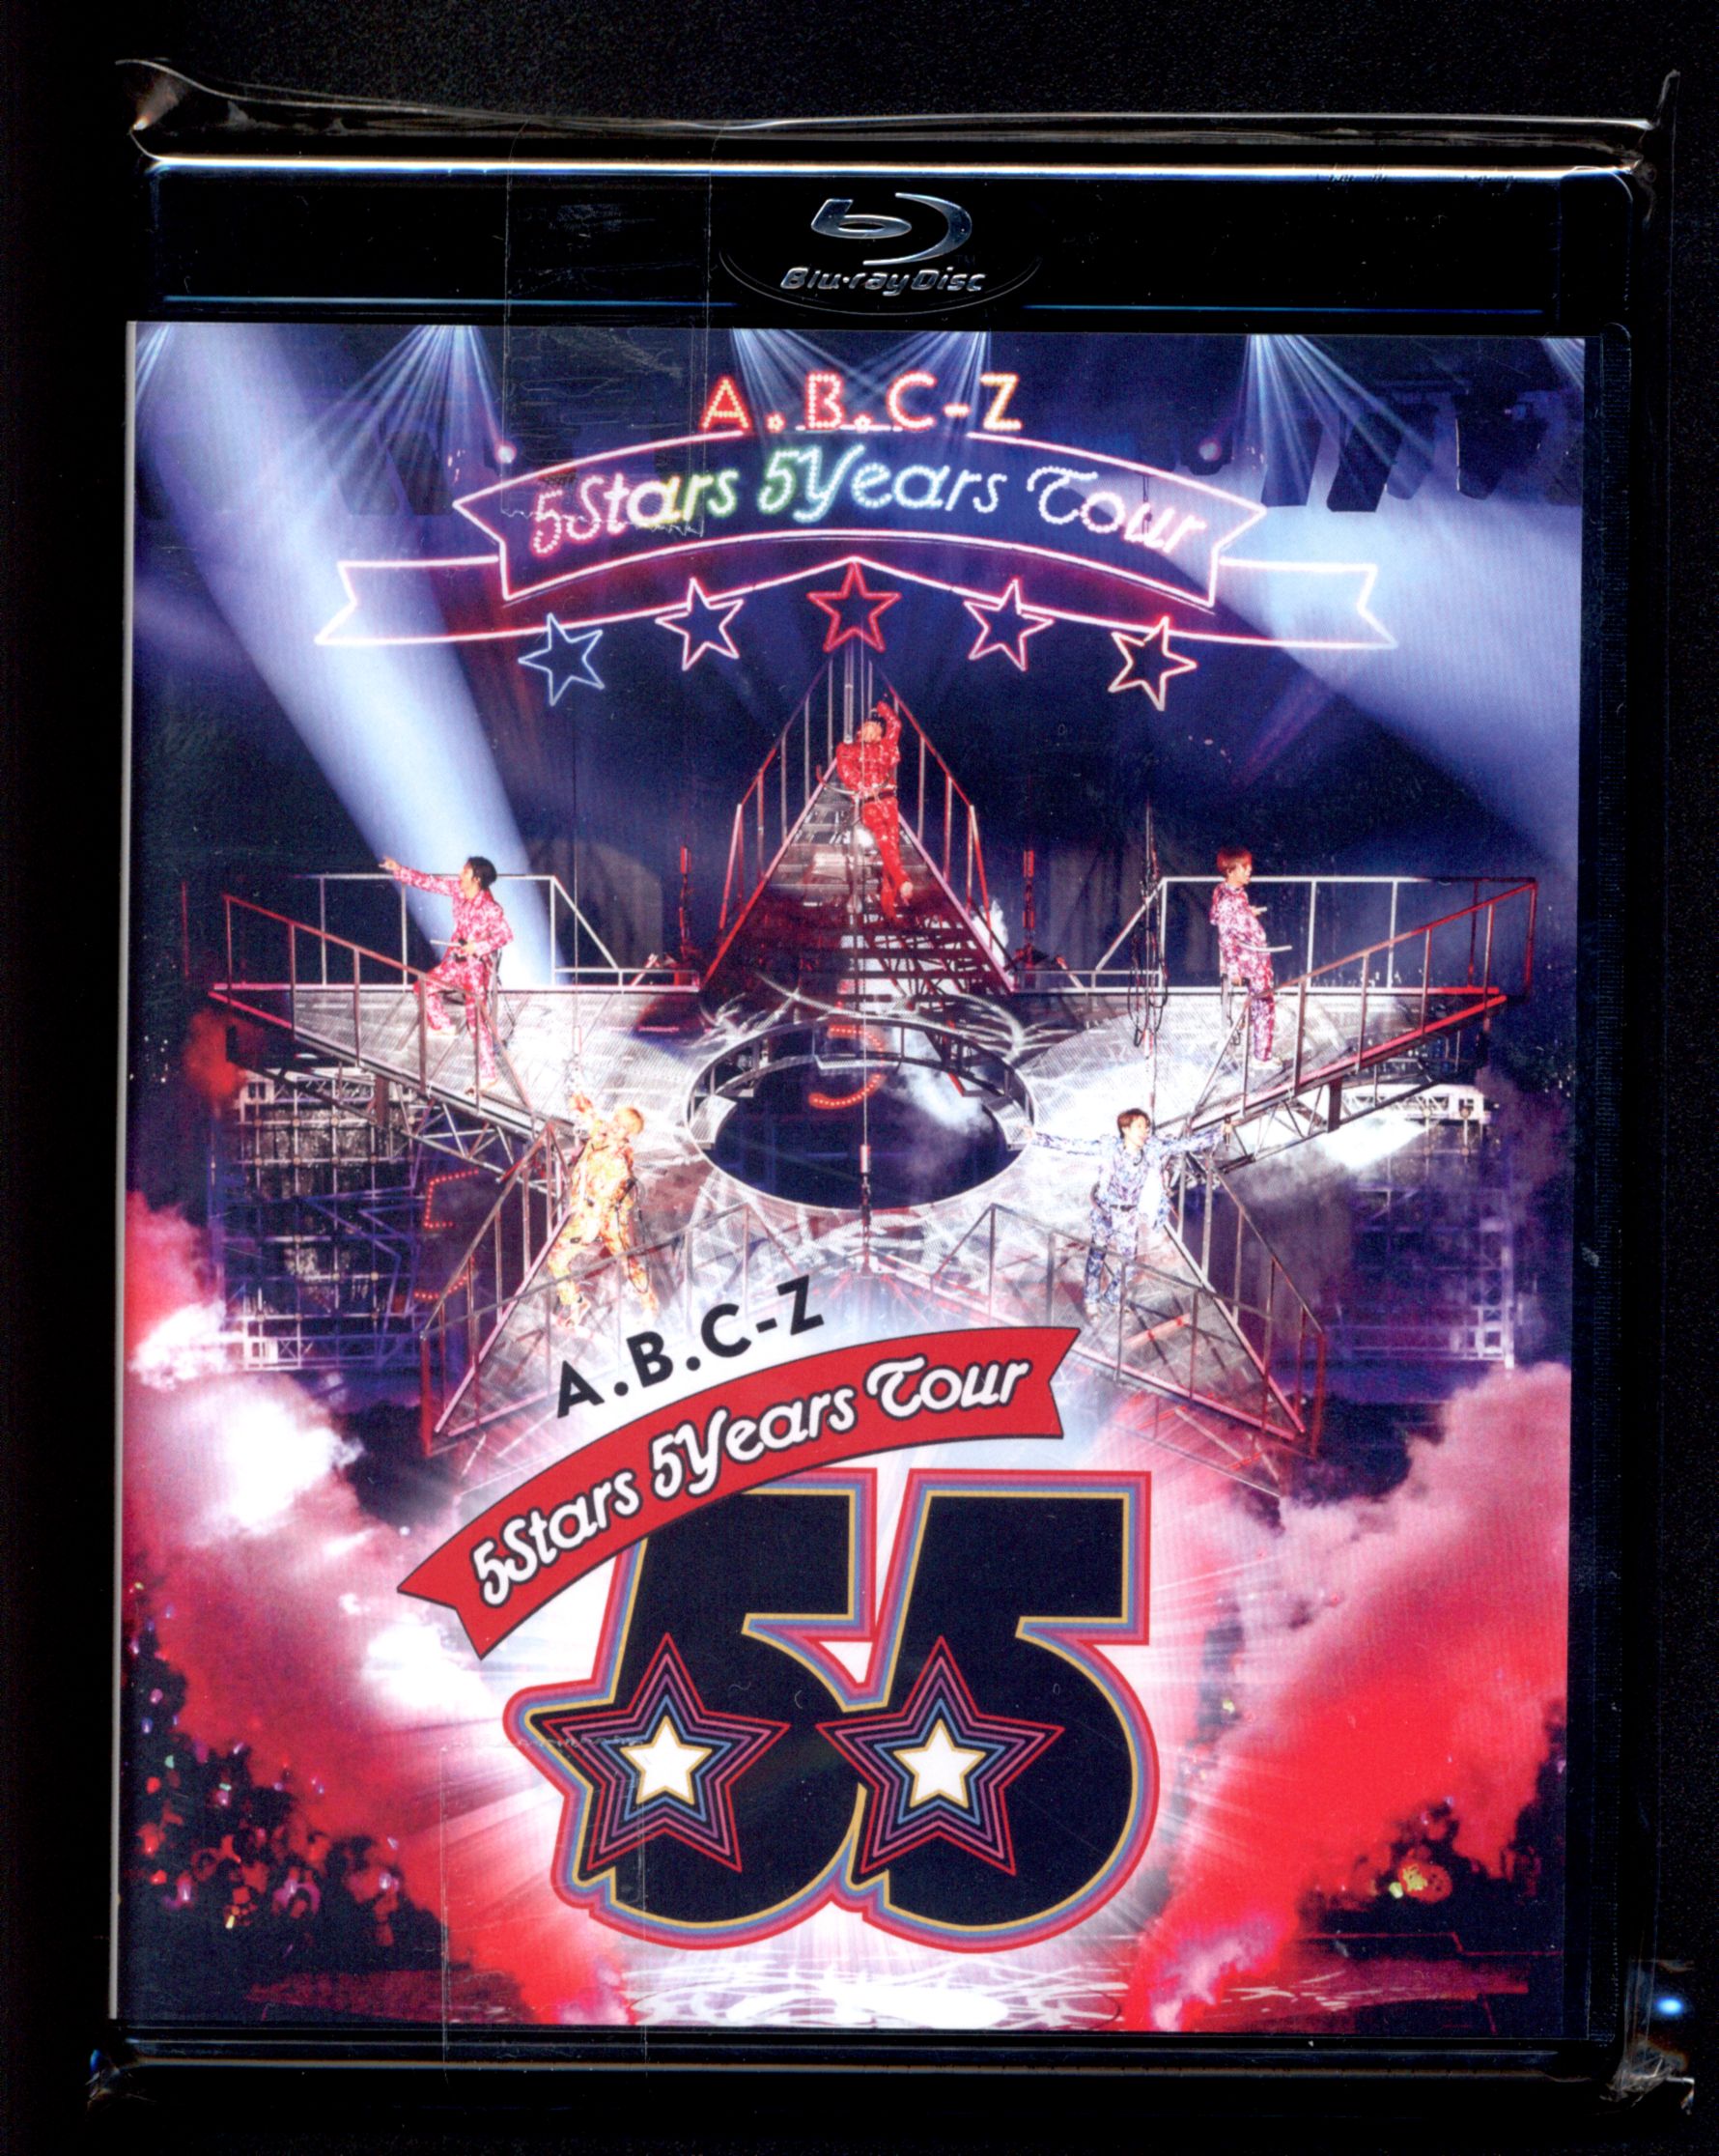 人気満点 A.B.C-Z 5Stars 5Years Tour Blu-ray ecousarecycling.com